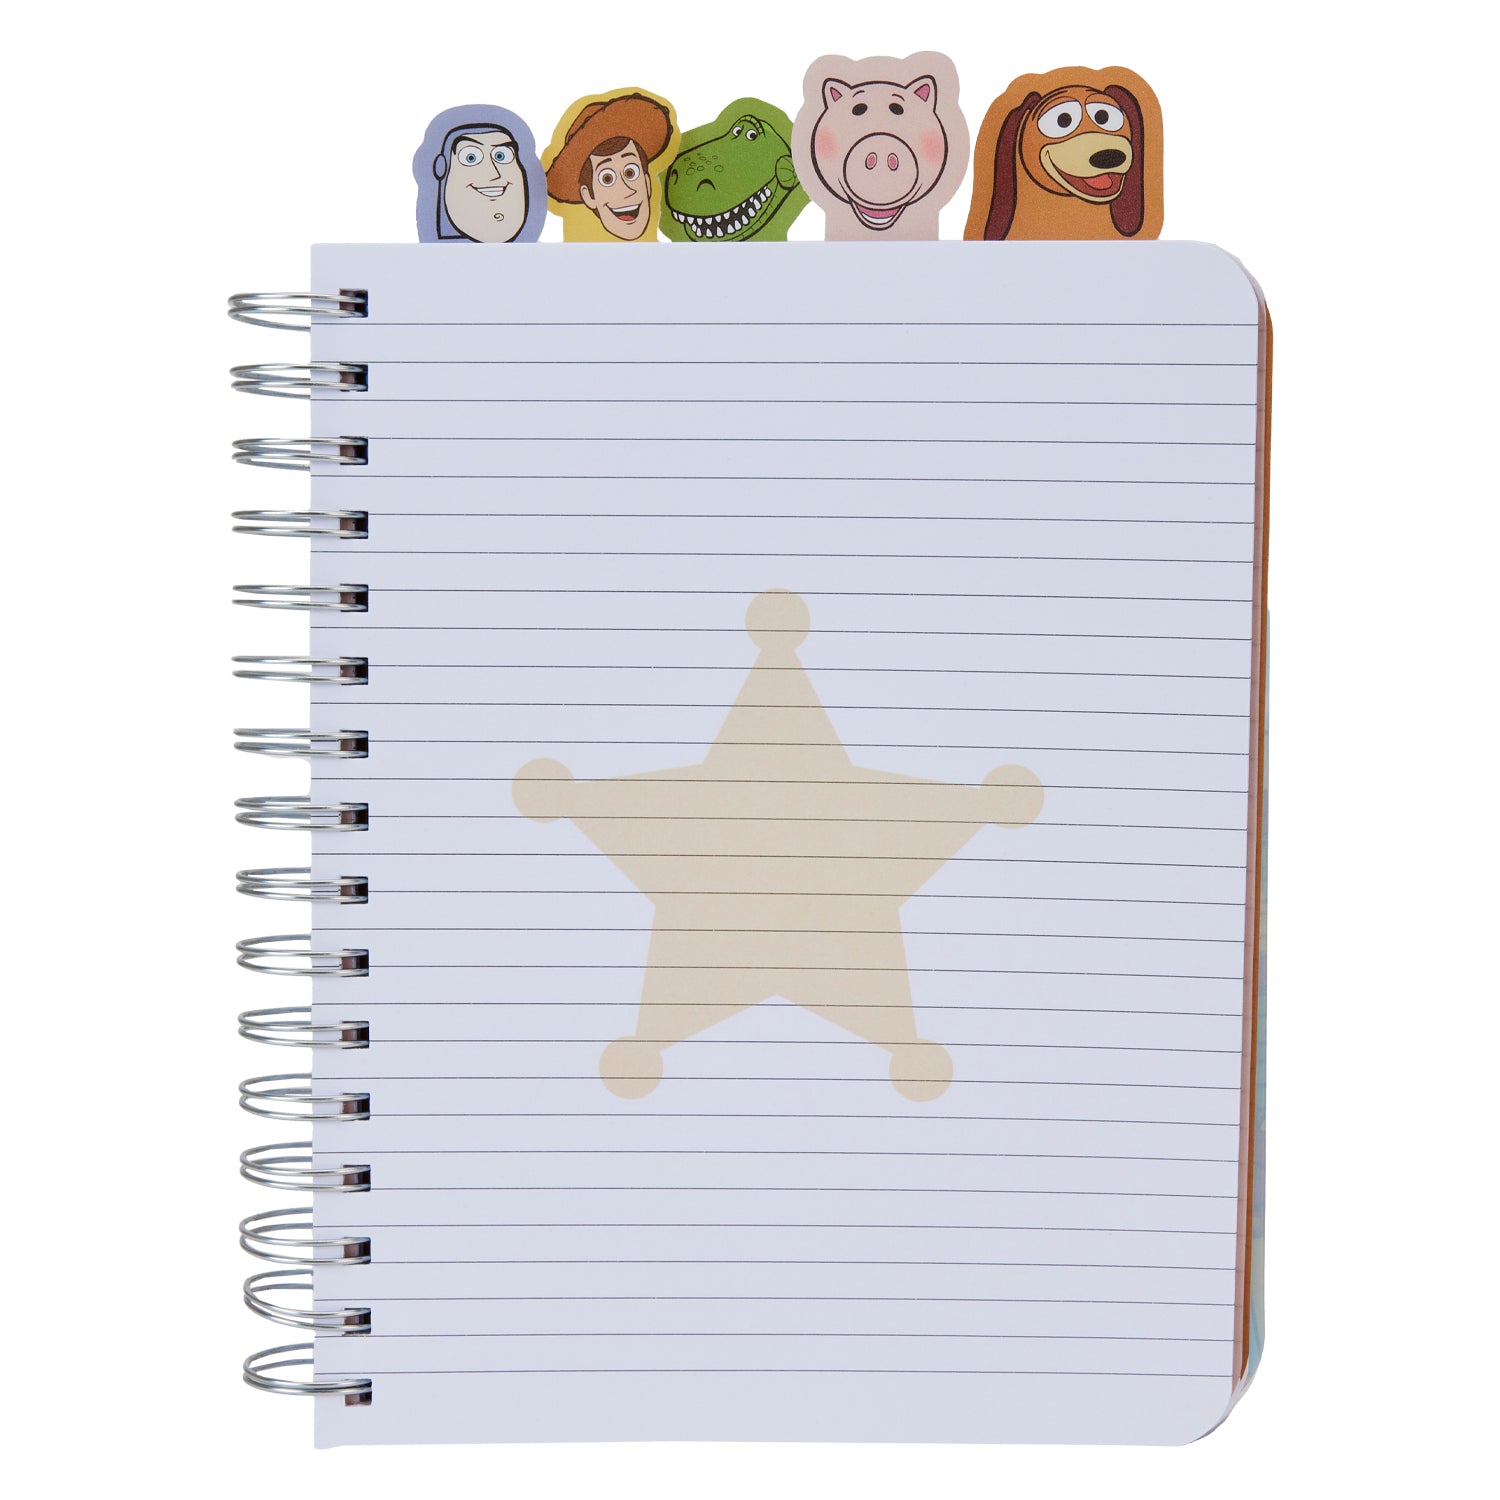 Loungefly x Disney Pixar Toy Story Spiral Notebook Journal